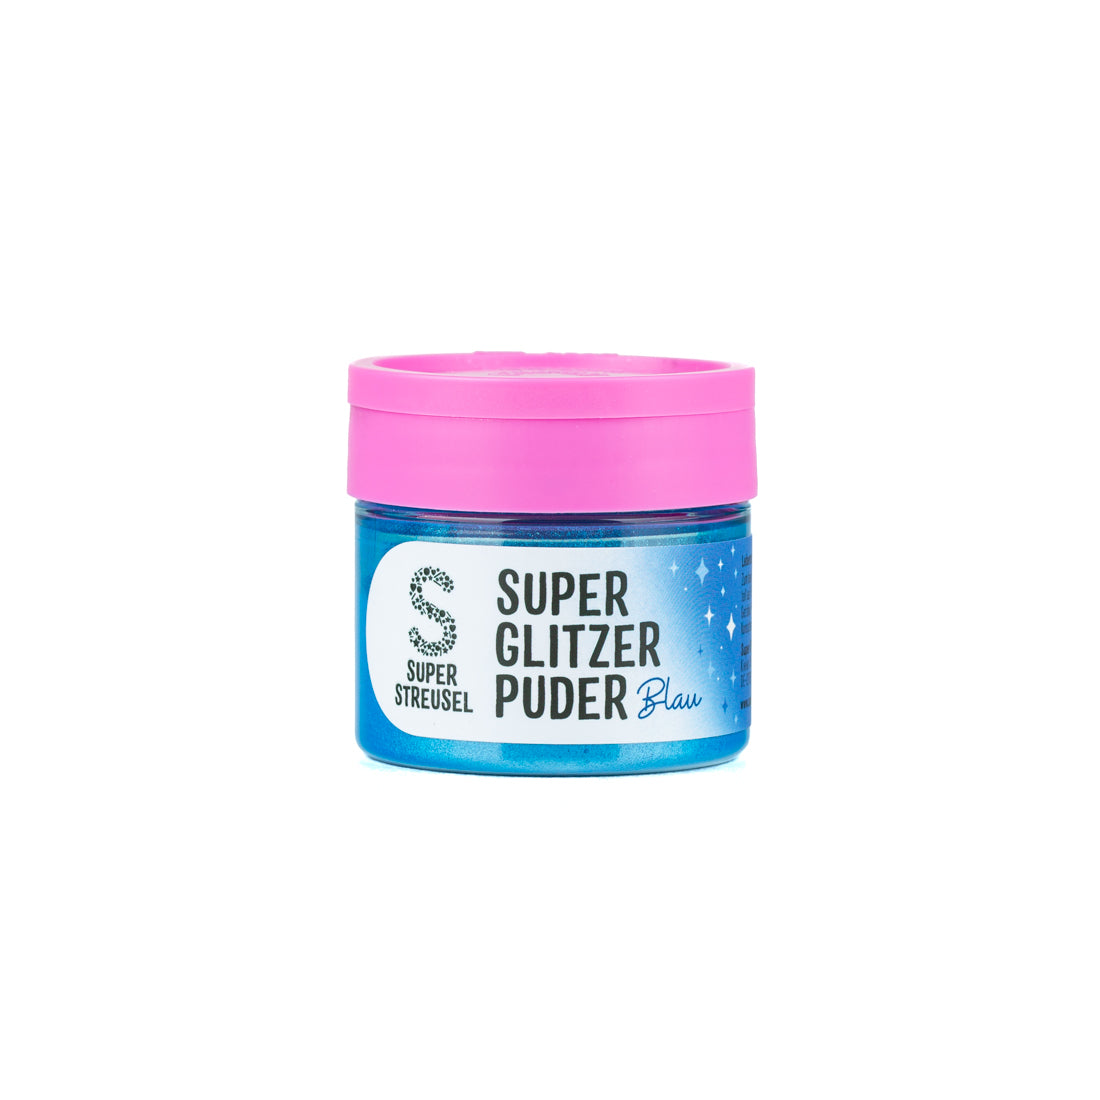 SuperGlitzerPuder Blau